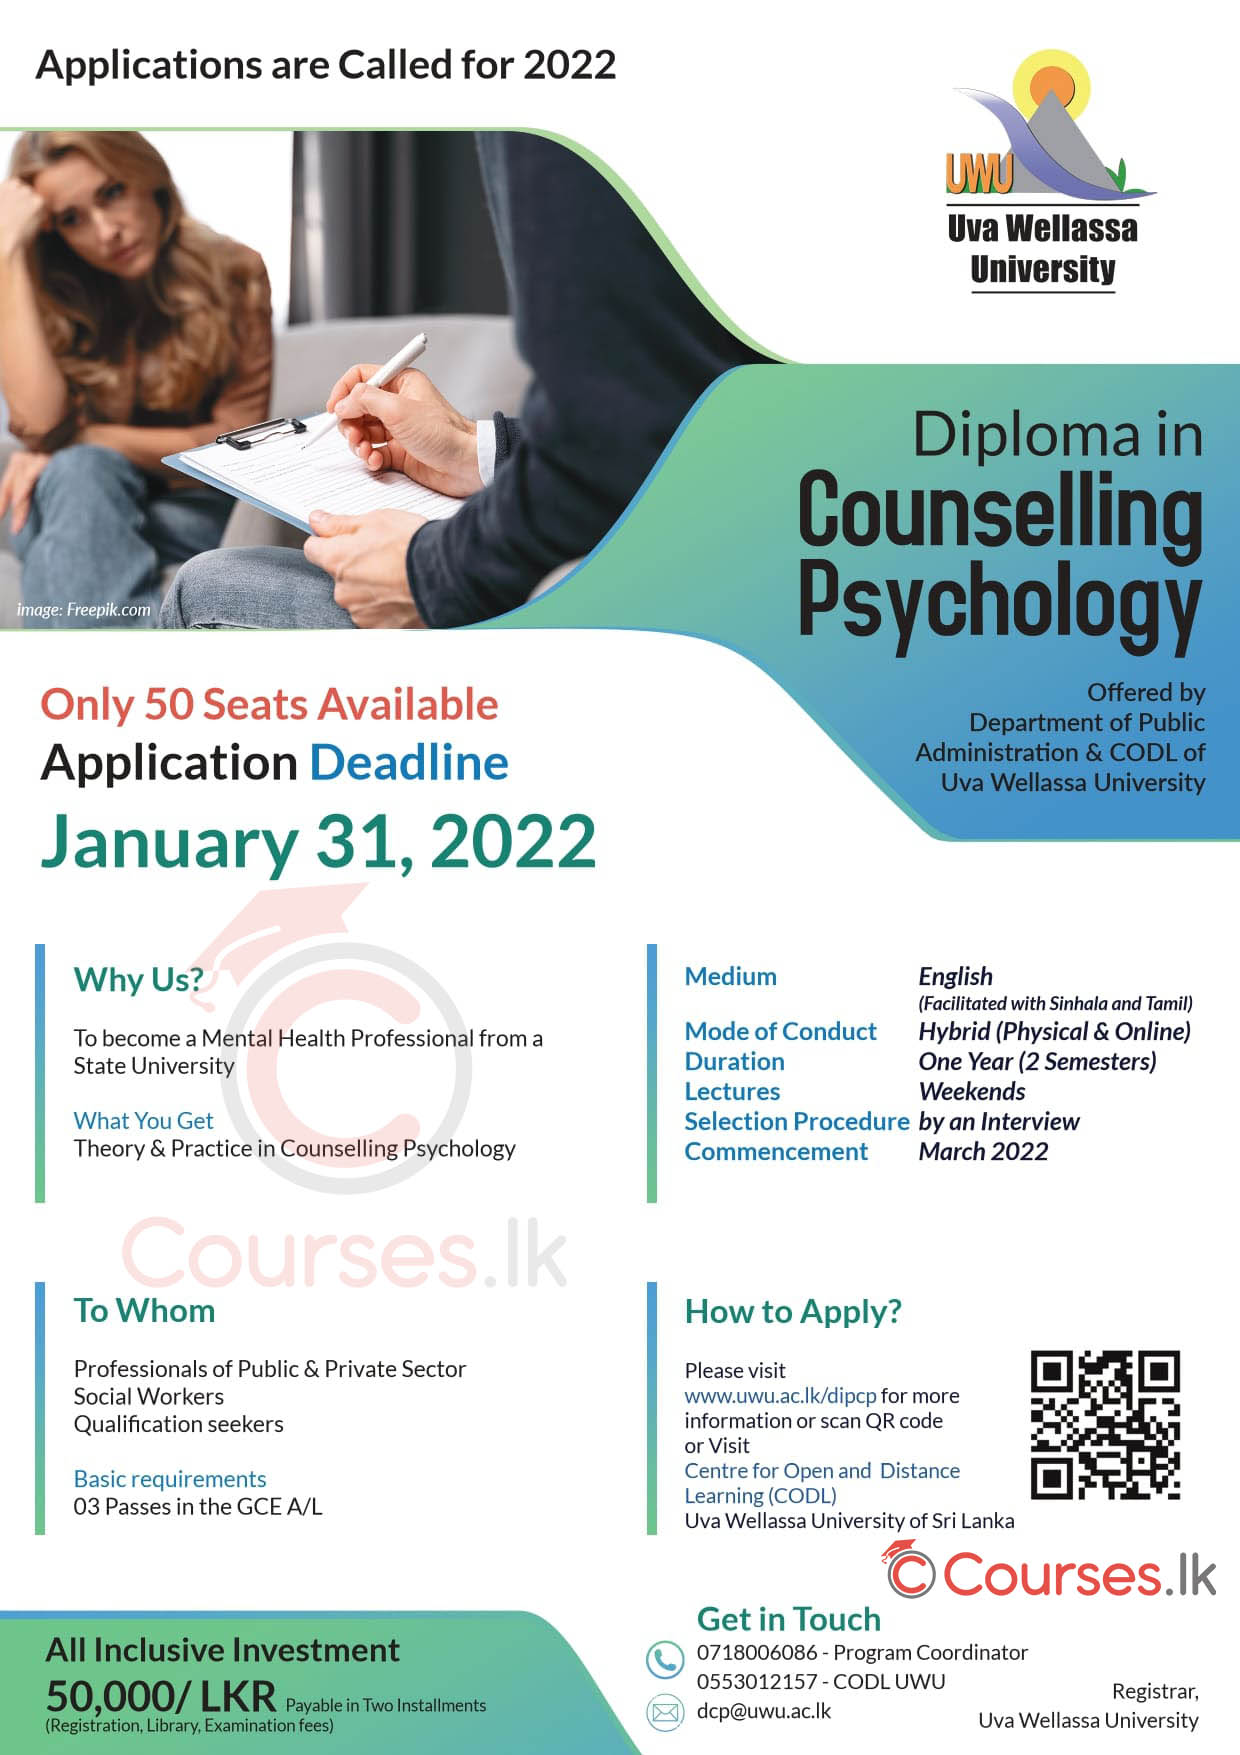 Diploma in Counselling Psychology 2022 - Uva Wellassa University (UWU)